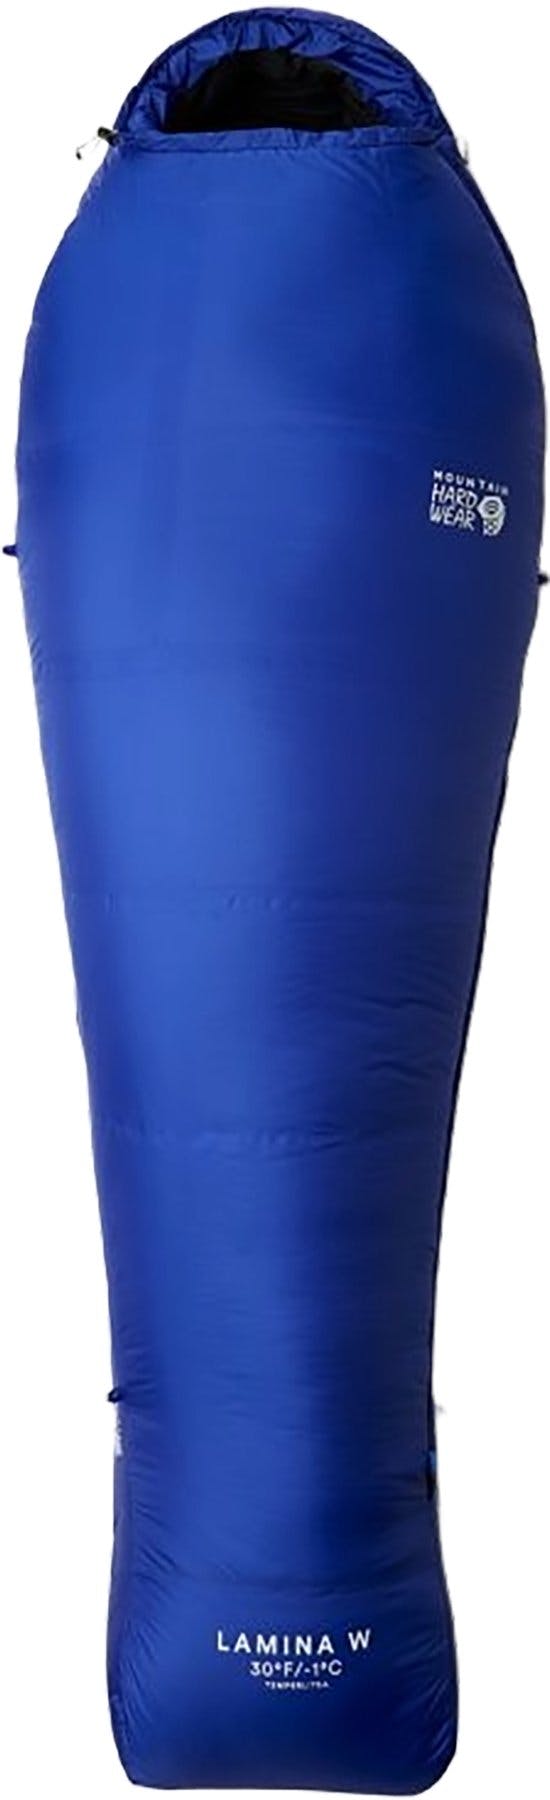 Product image for Lamina Sleeping Bag 30°F/-1°C - Long - Women's